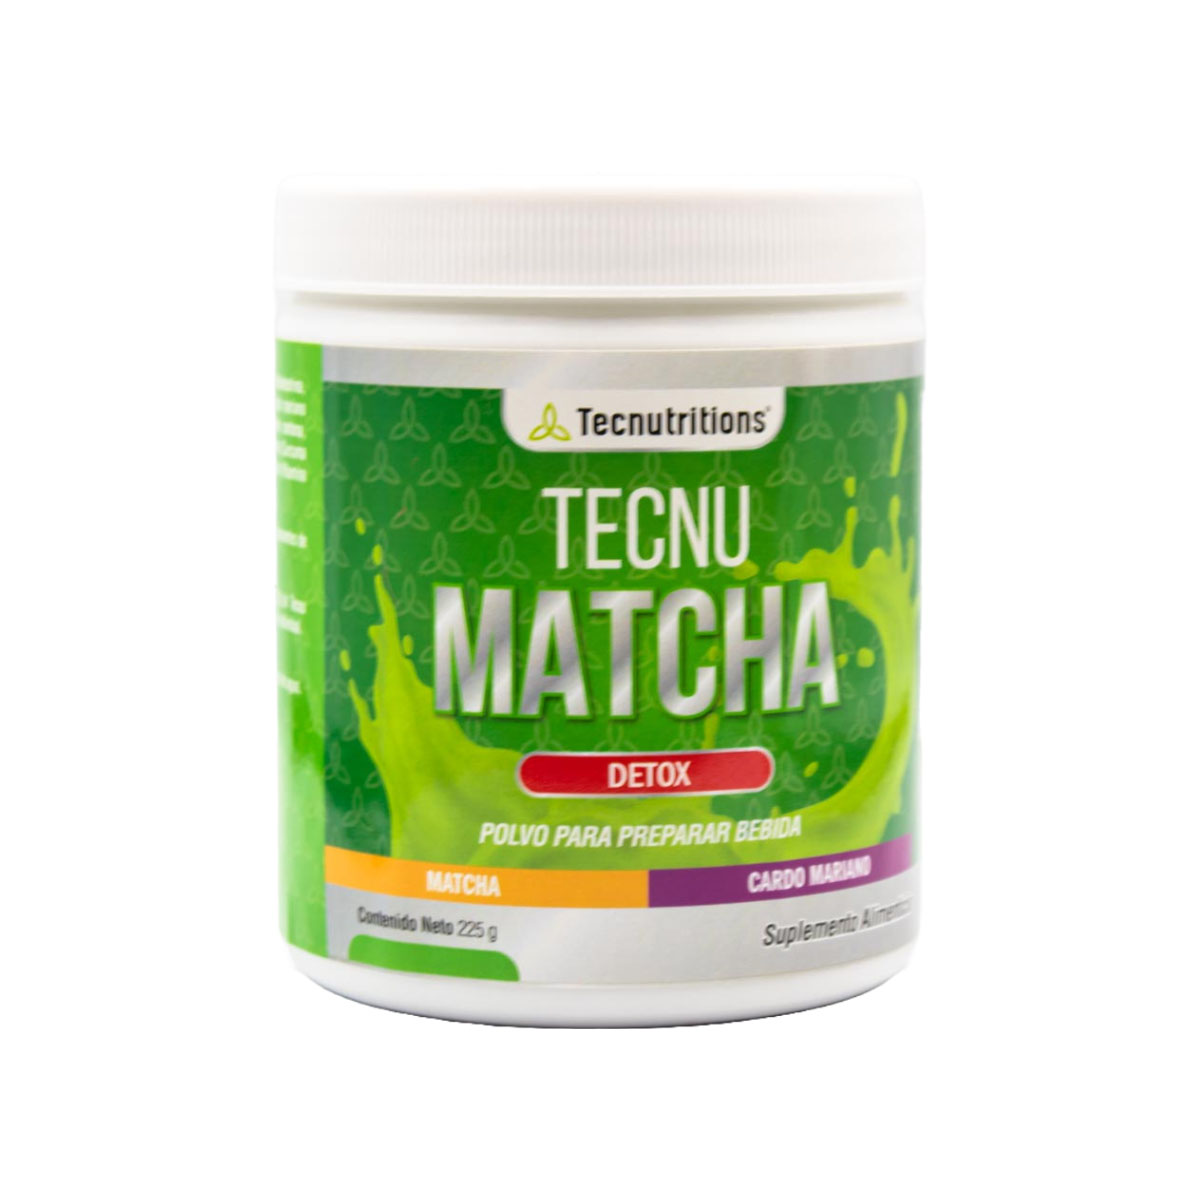 Suplemento alimenticio Tecnu Matcha, 225 gr, con té de matcha, maltodextrina, fibra de manzana, detox